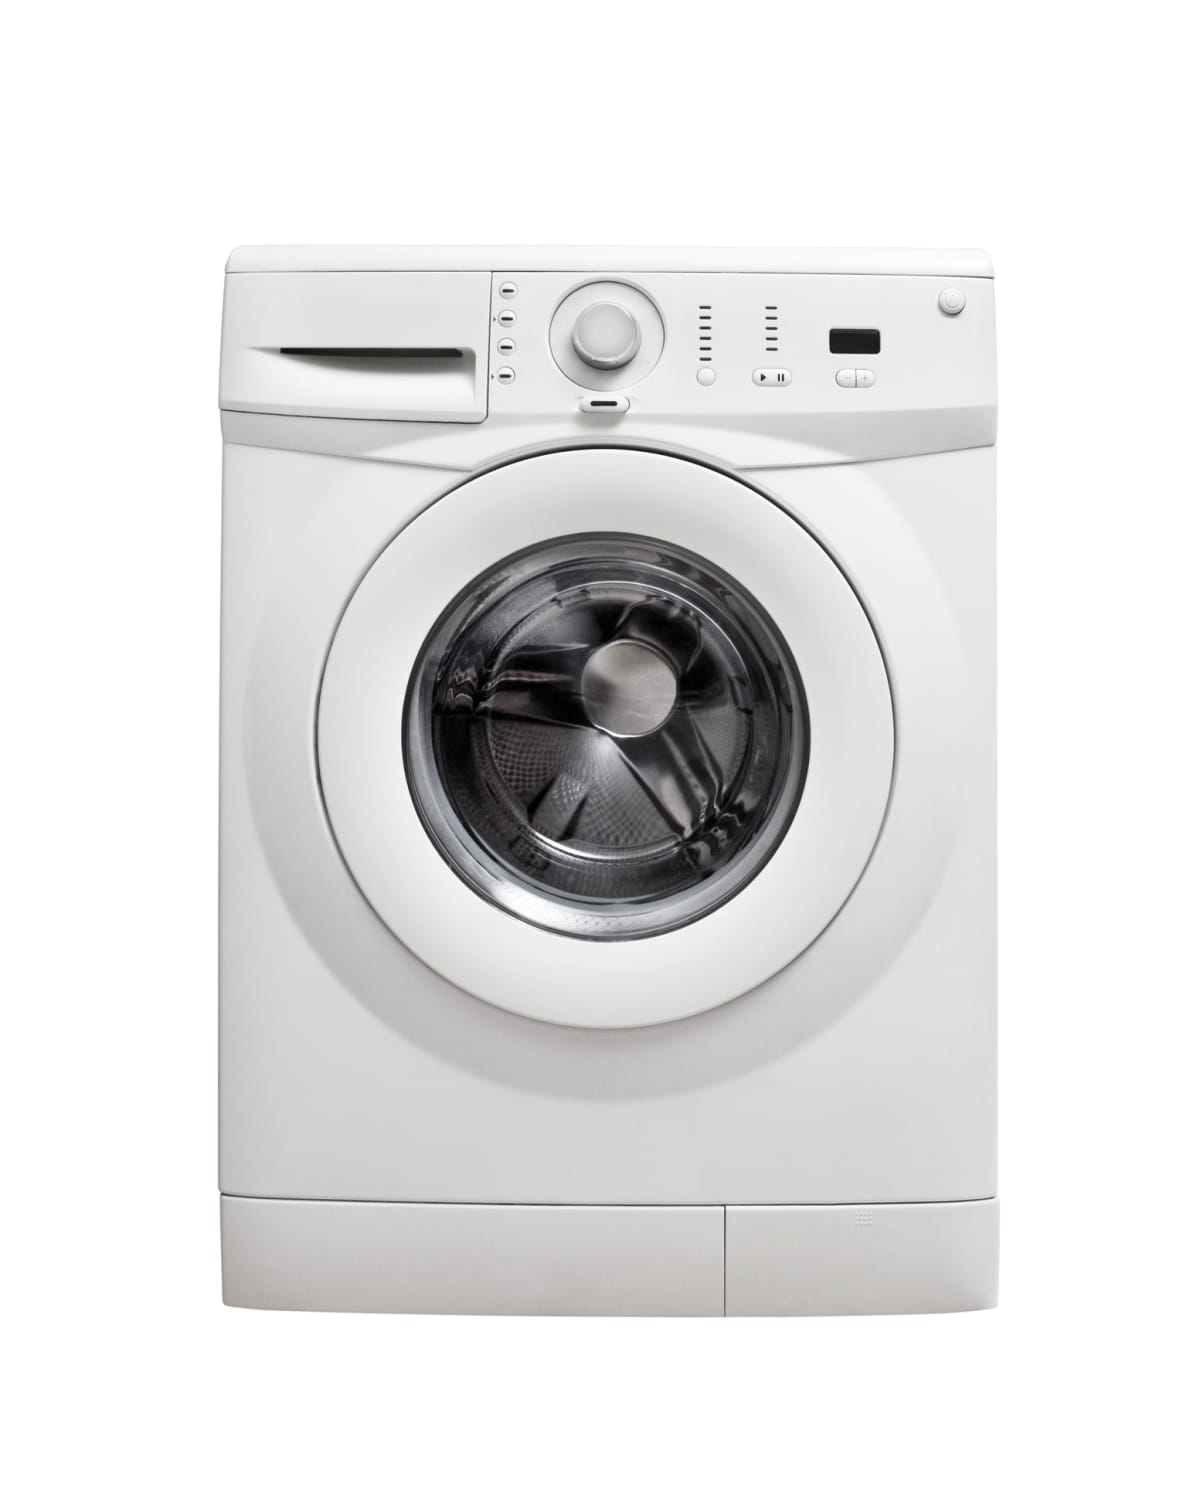 A washing machine on a white background 